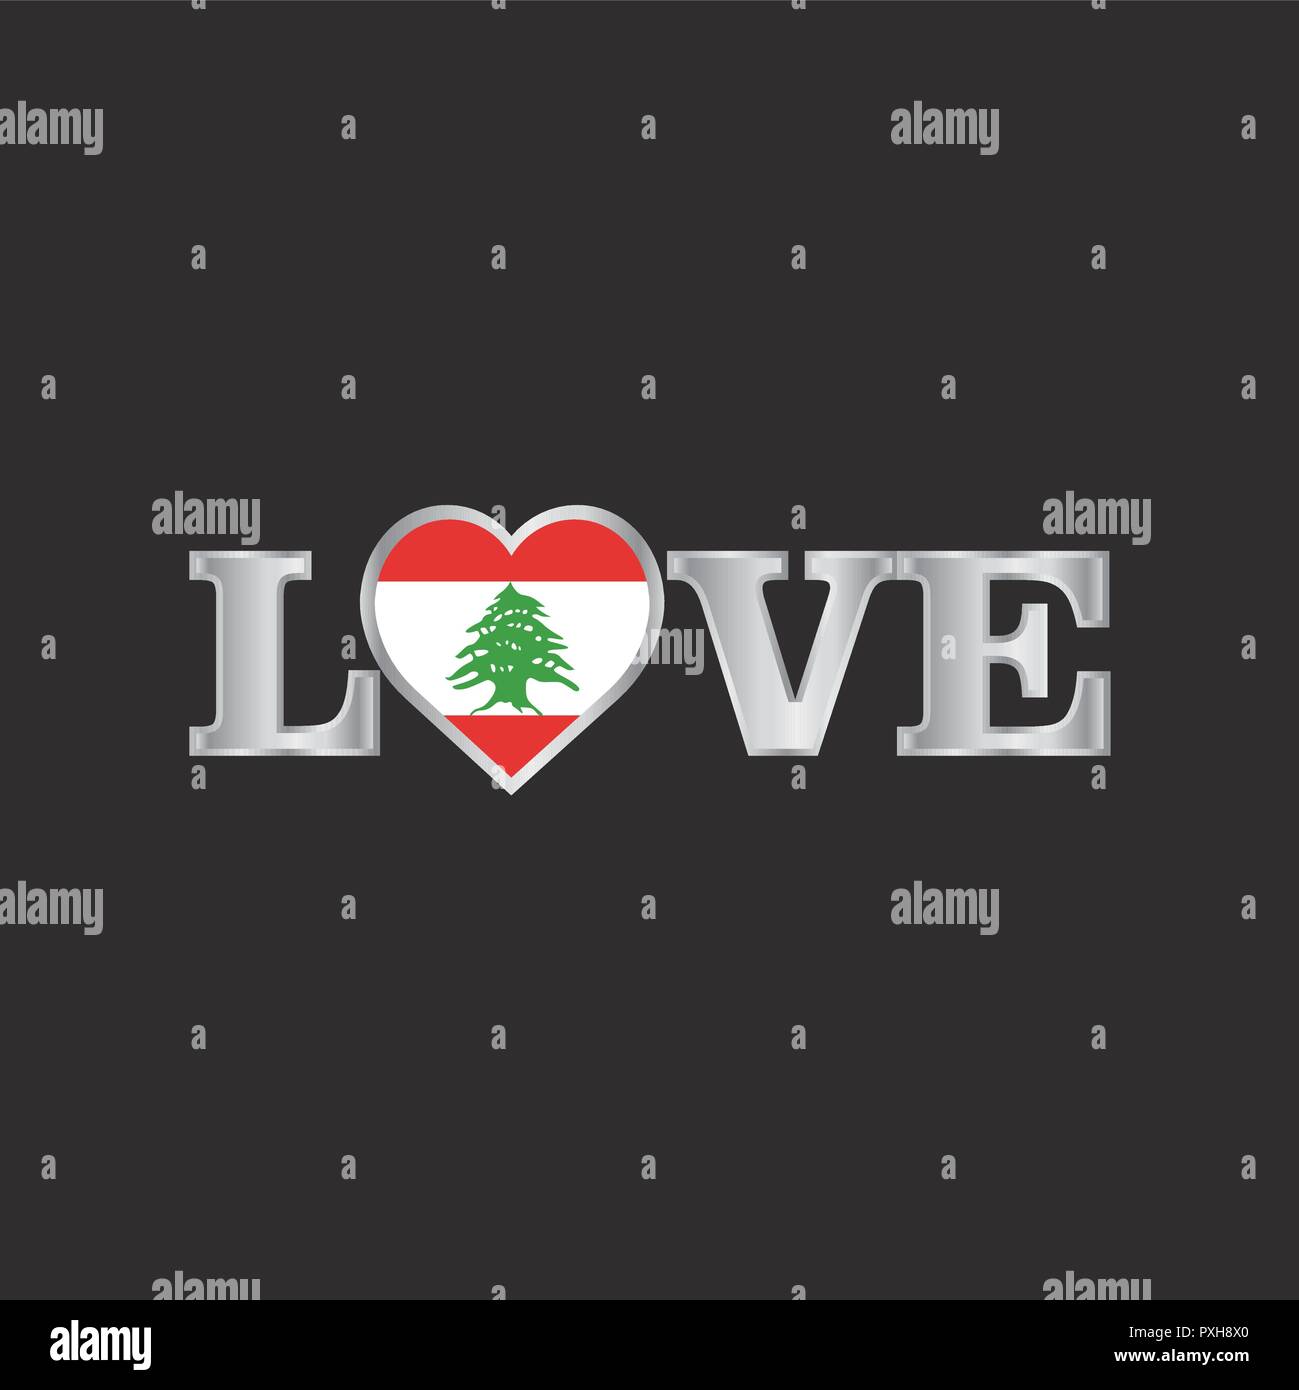 Love typography with Lebanon flag design vector Stock Vector